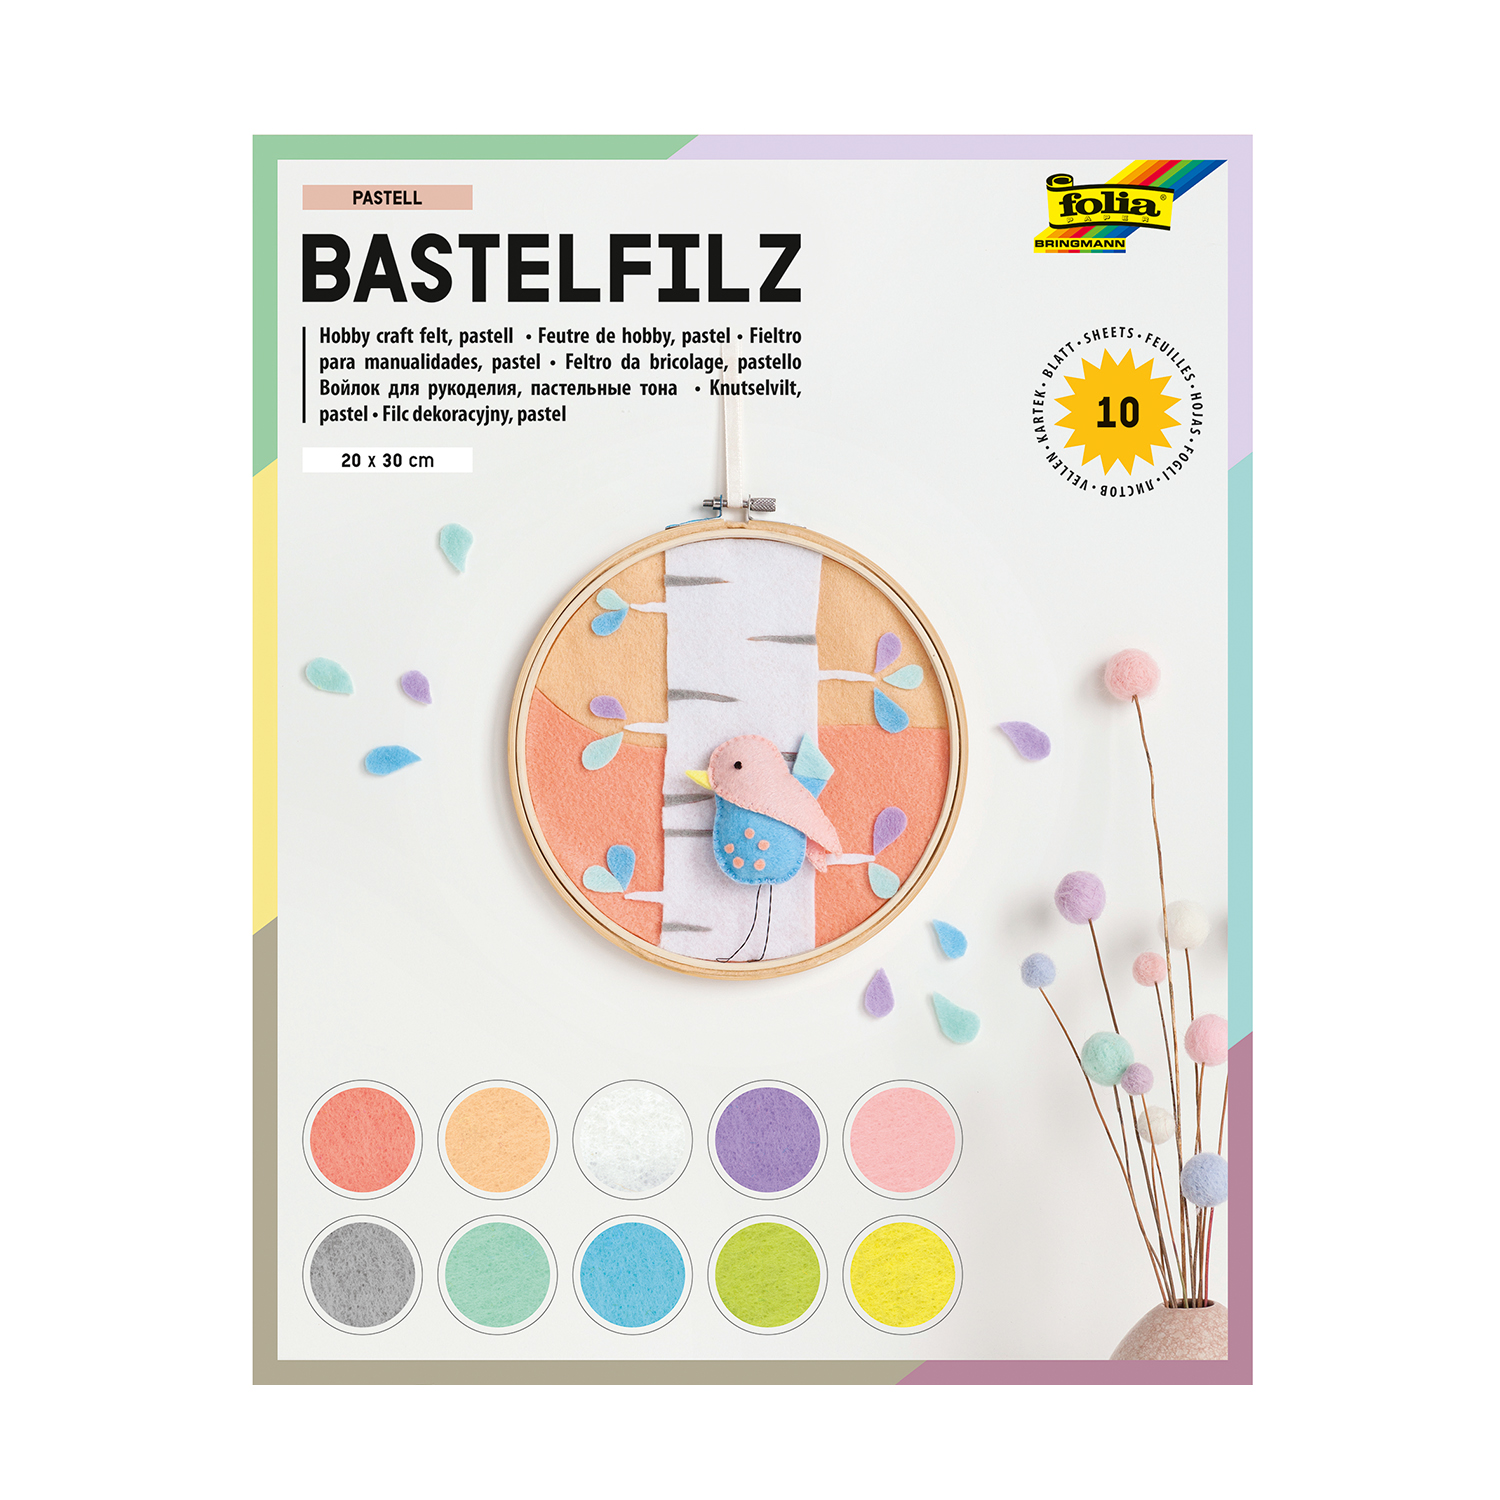 NEU Bastelfilz-Set, Pastellfarben, 10 Bogen, 20 x 30 cm, 150 g/m²